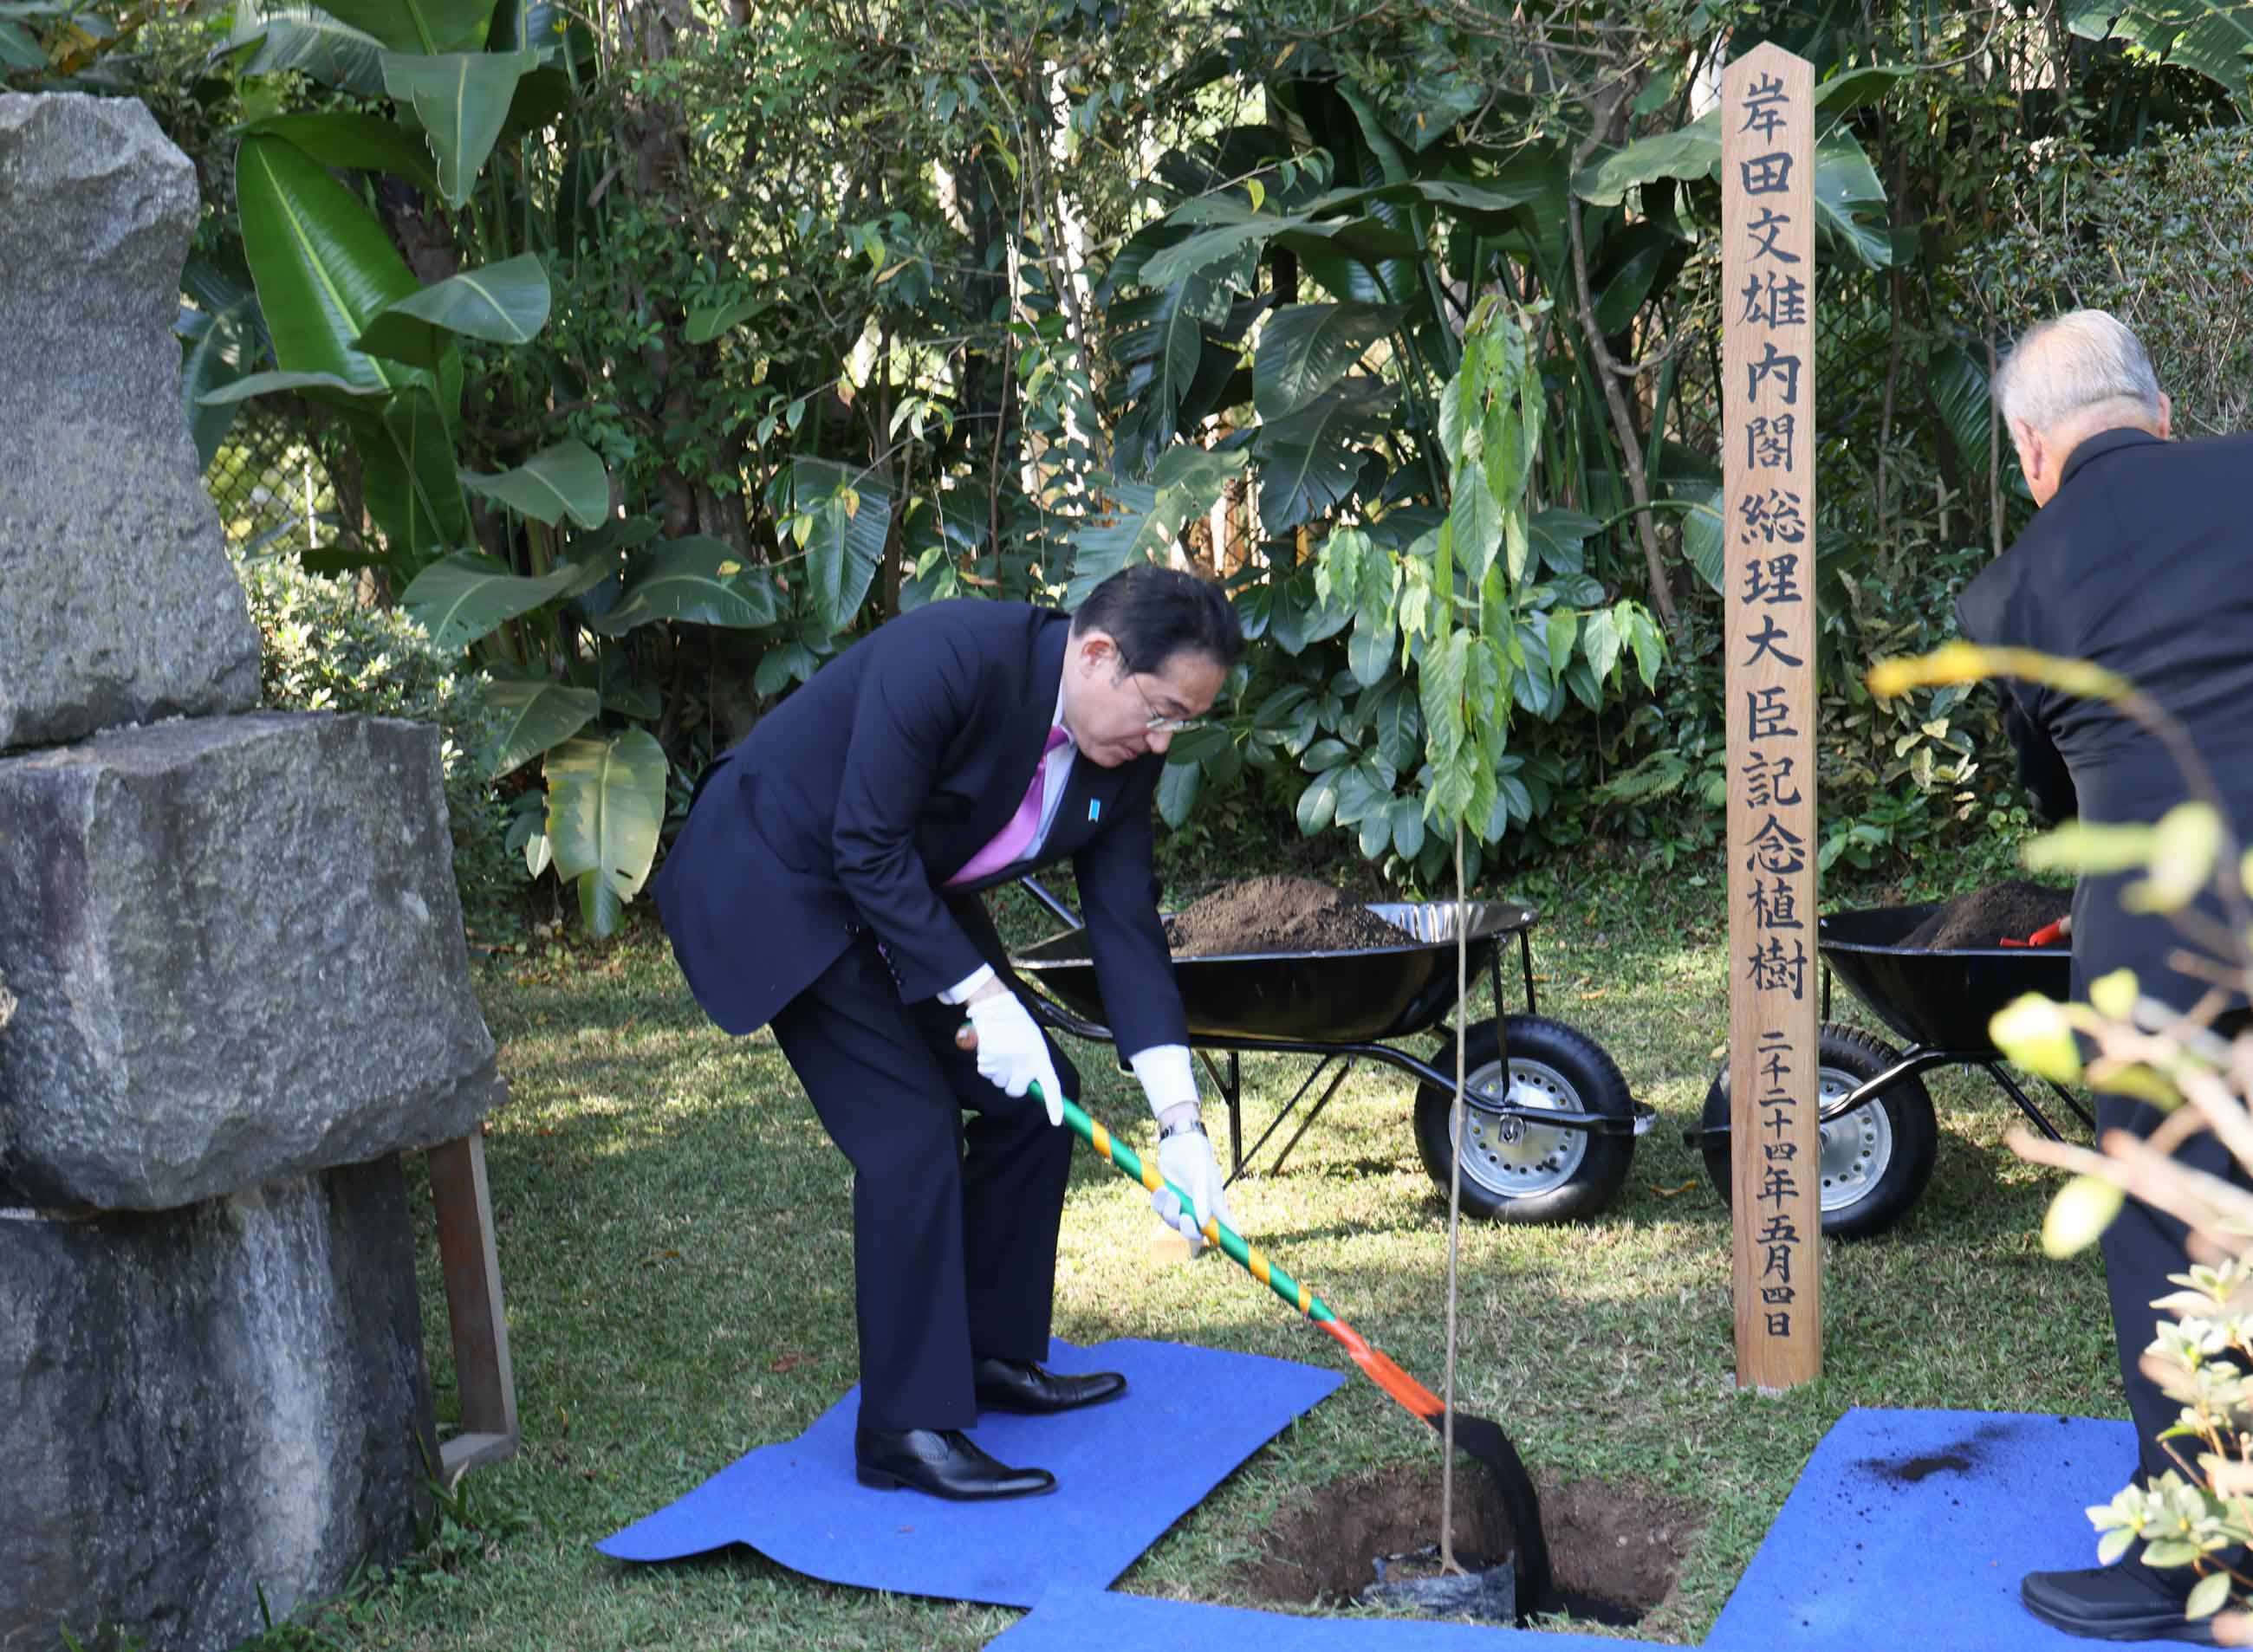 Prime Minister Kishida planting a commemorative cherry tree at the Japan Pavilion in Ibirapuera Park